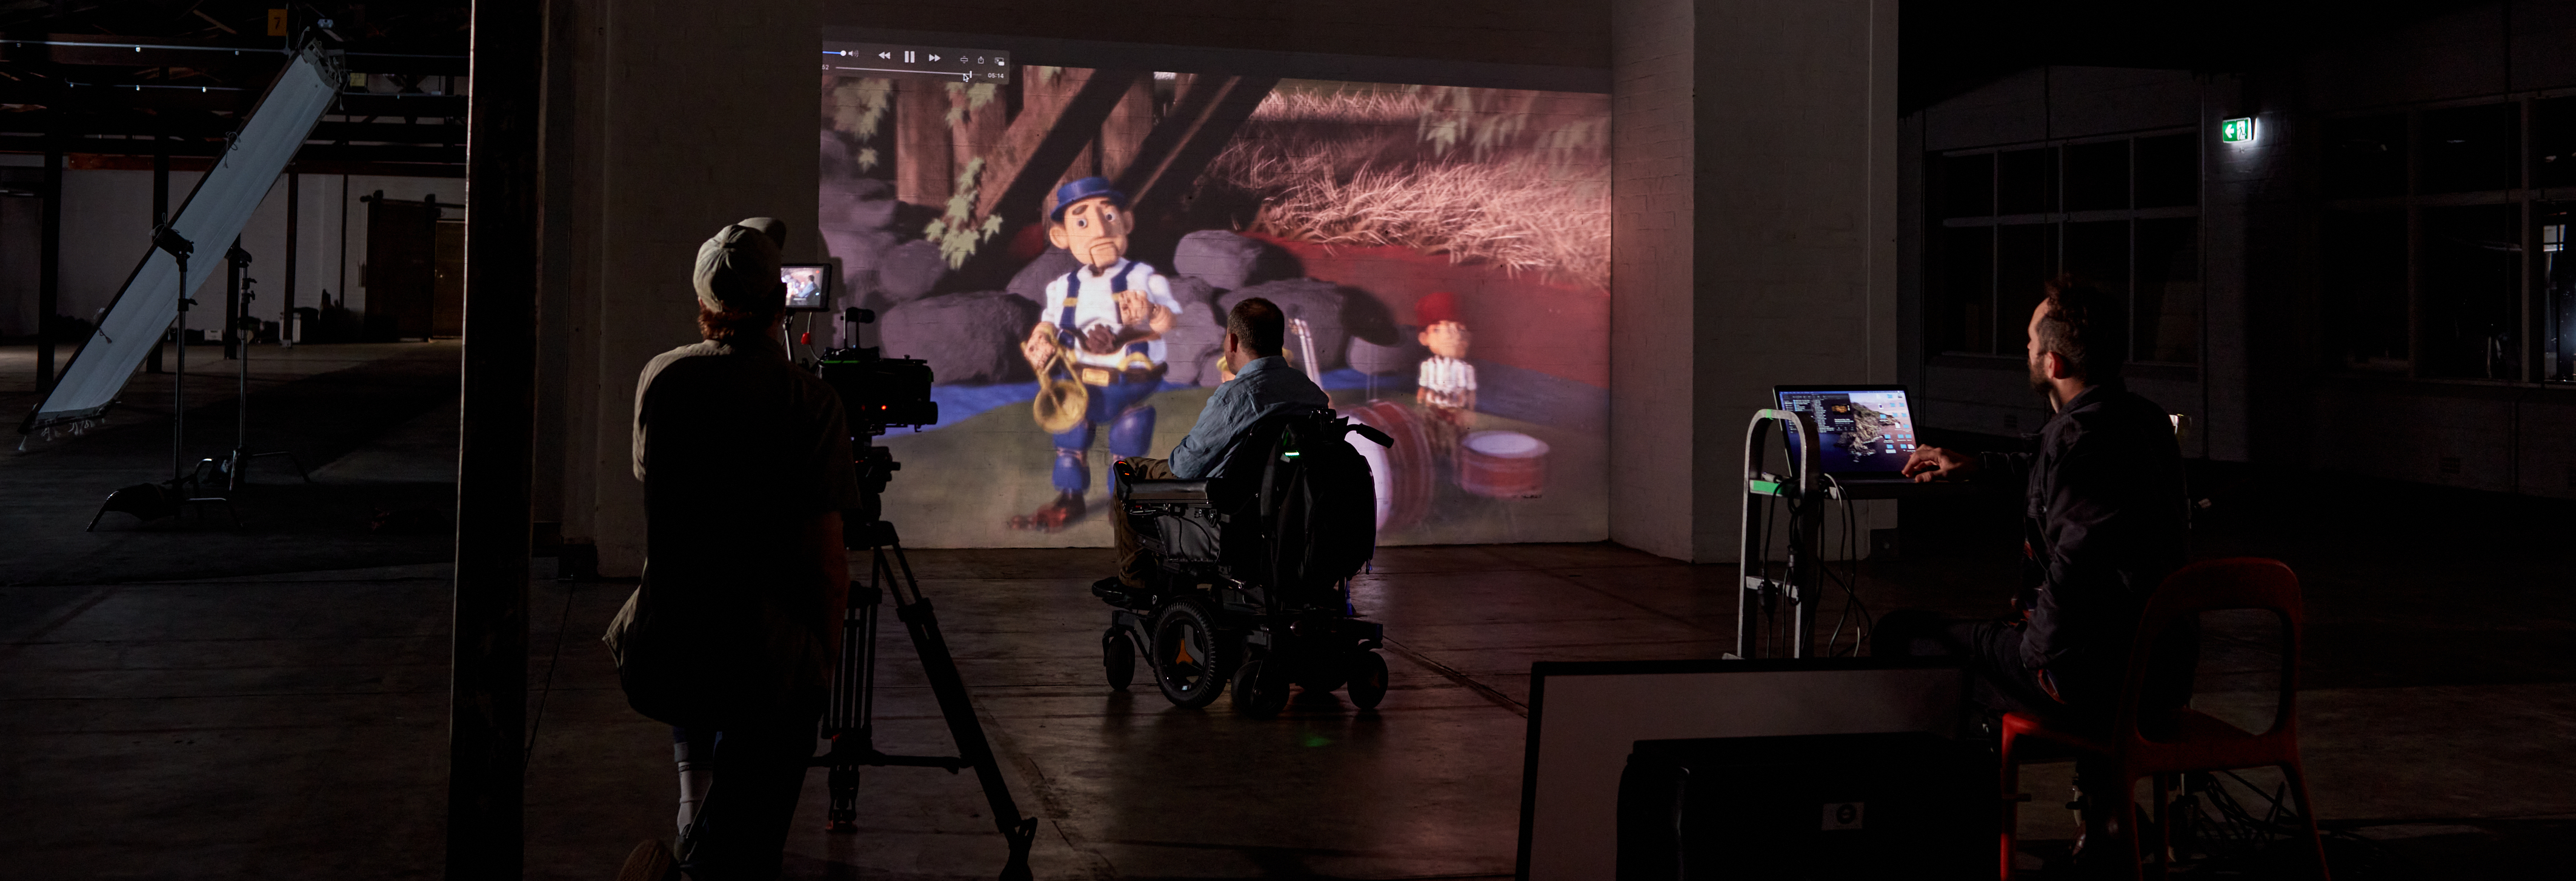 A wheelchair user watching a movie in a dark cinema and being filmed